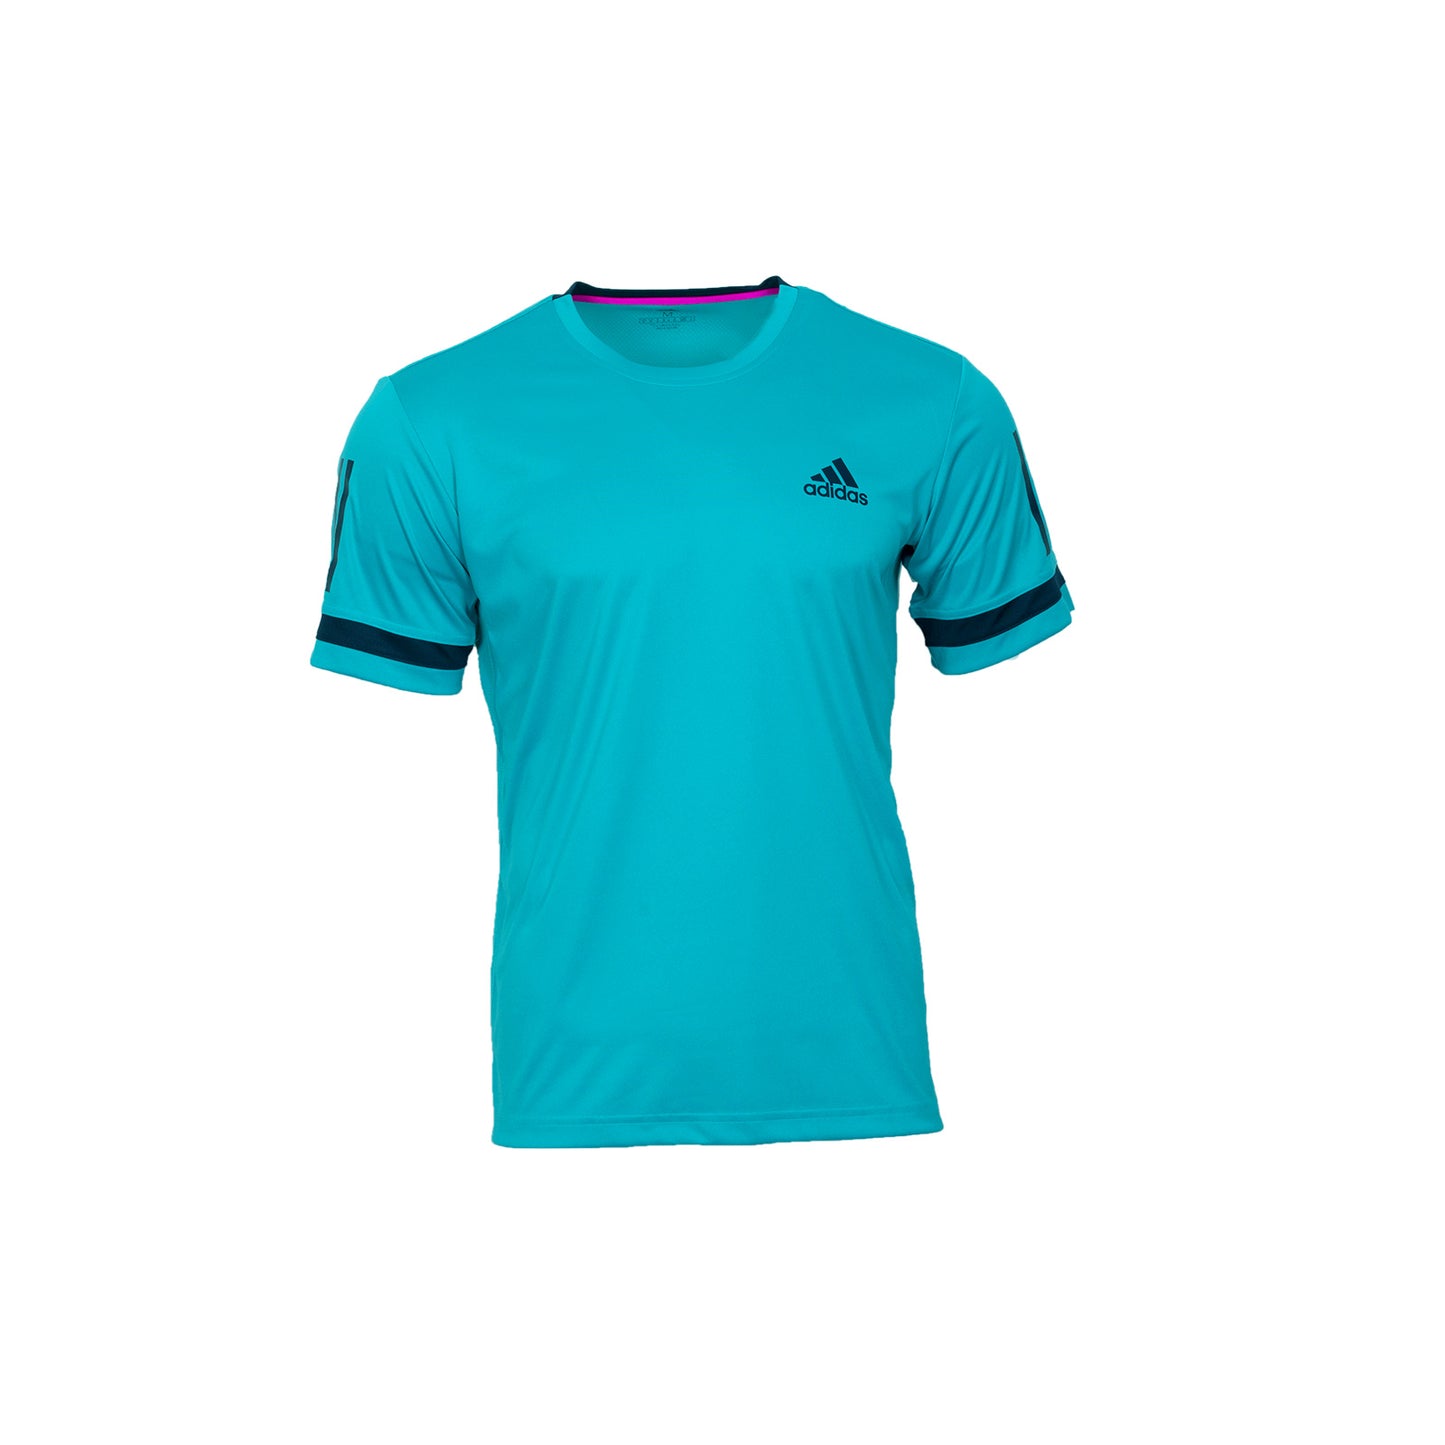 Adidas CLUB 3 Stripes Herren Tennis T-Shirt Sportshirt Climacool türkis D93023 Blau XS